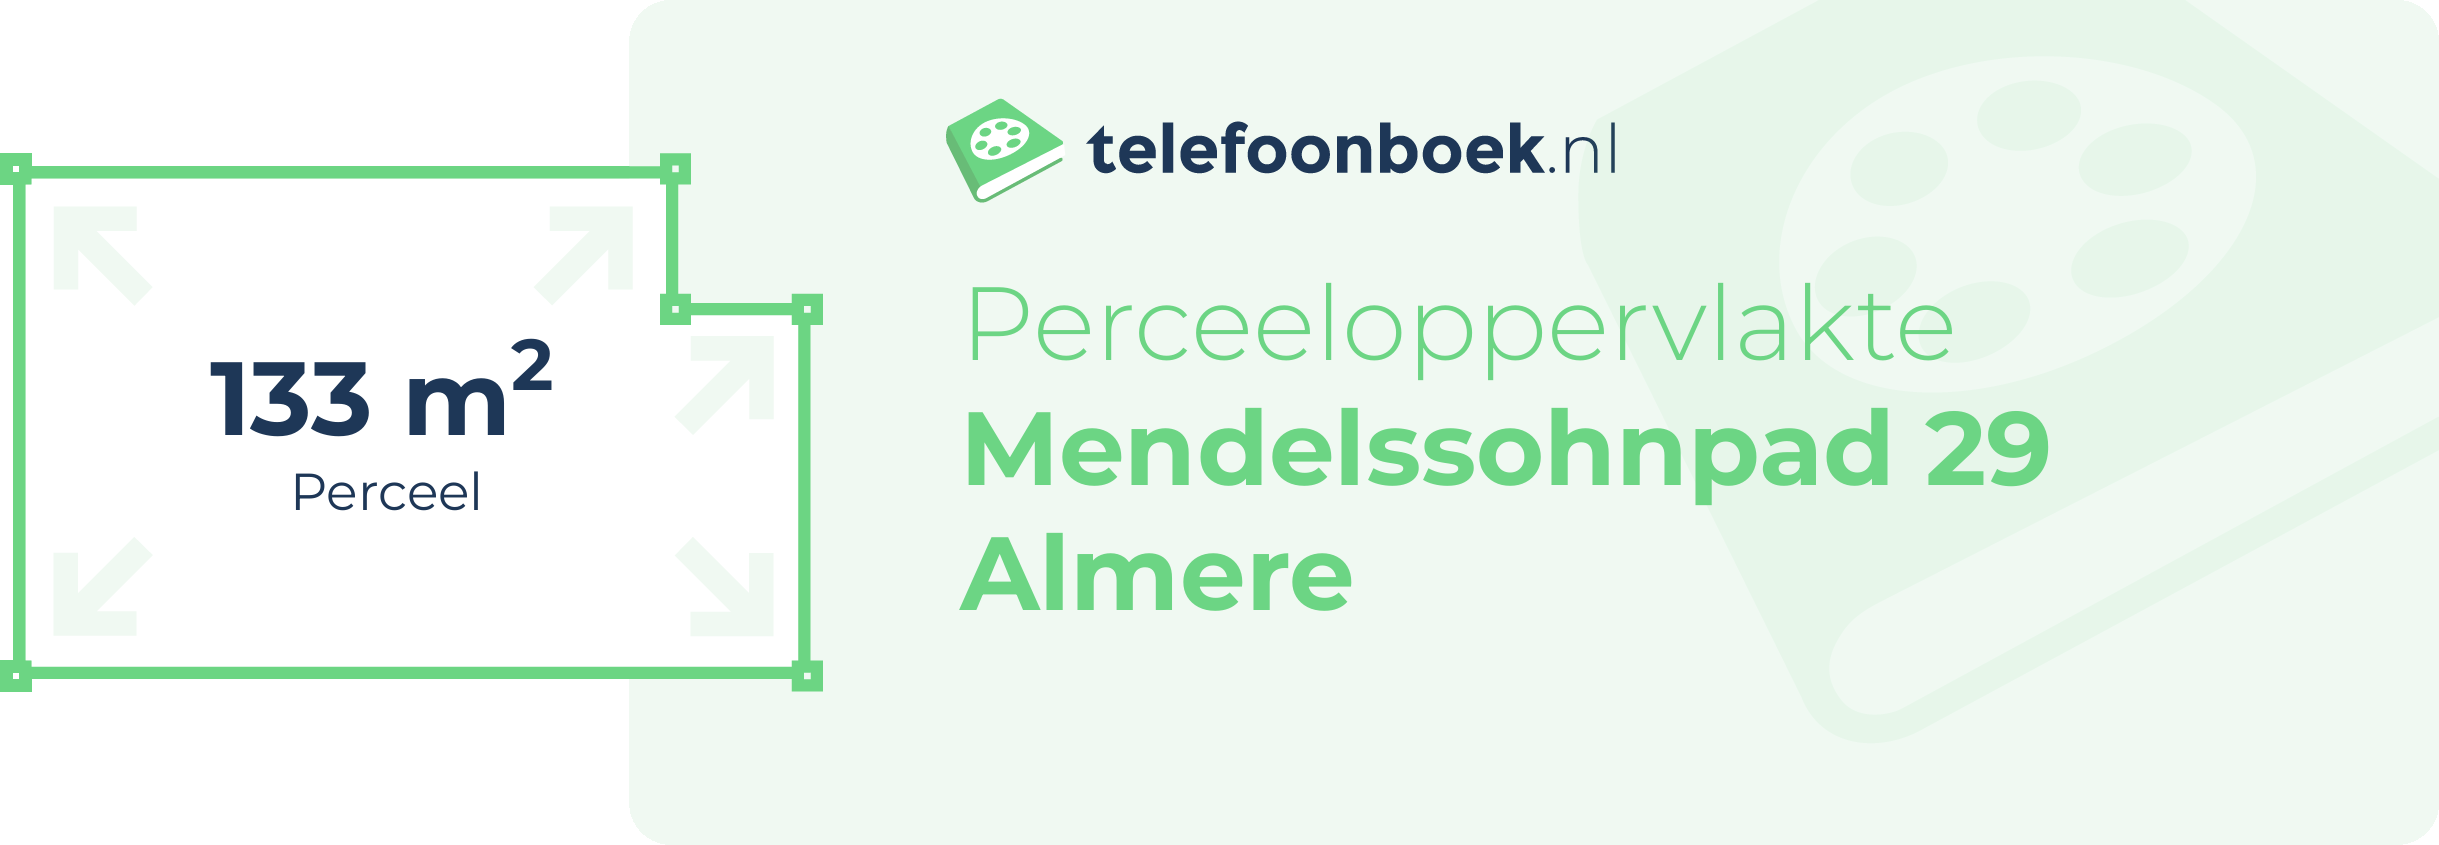 Perceeloppervlakte Mendelssohnpad 29 Almere